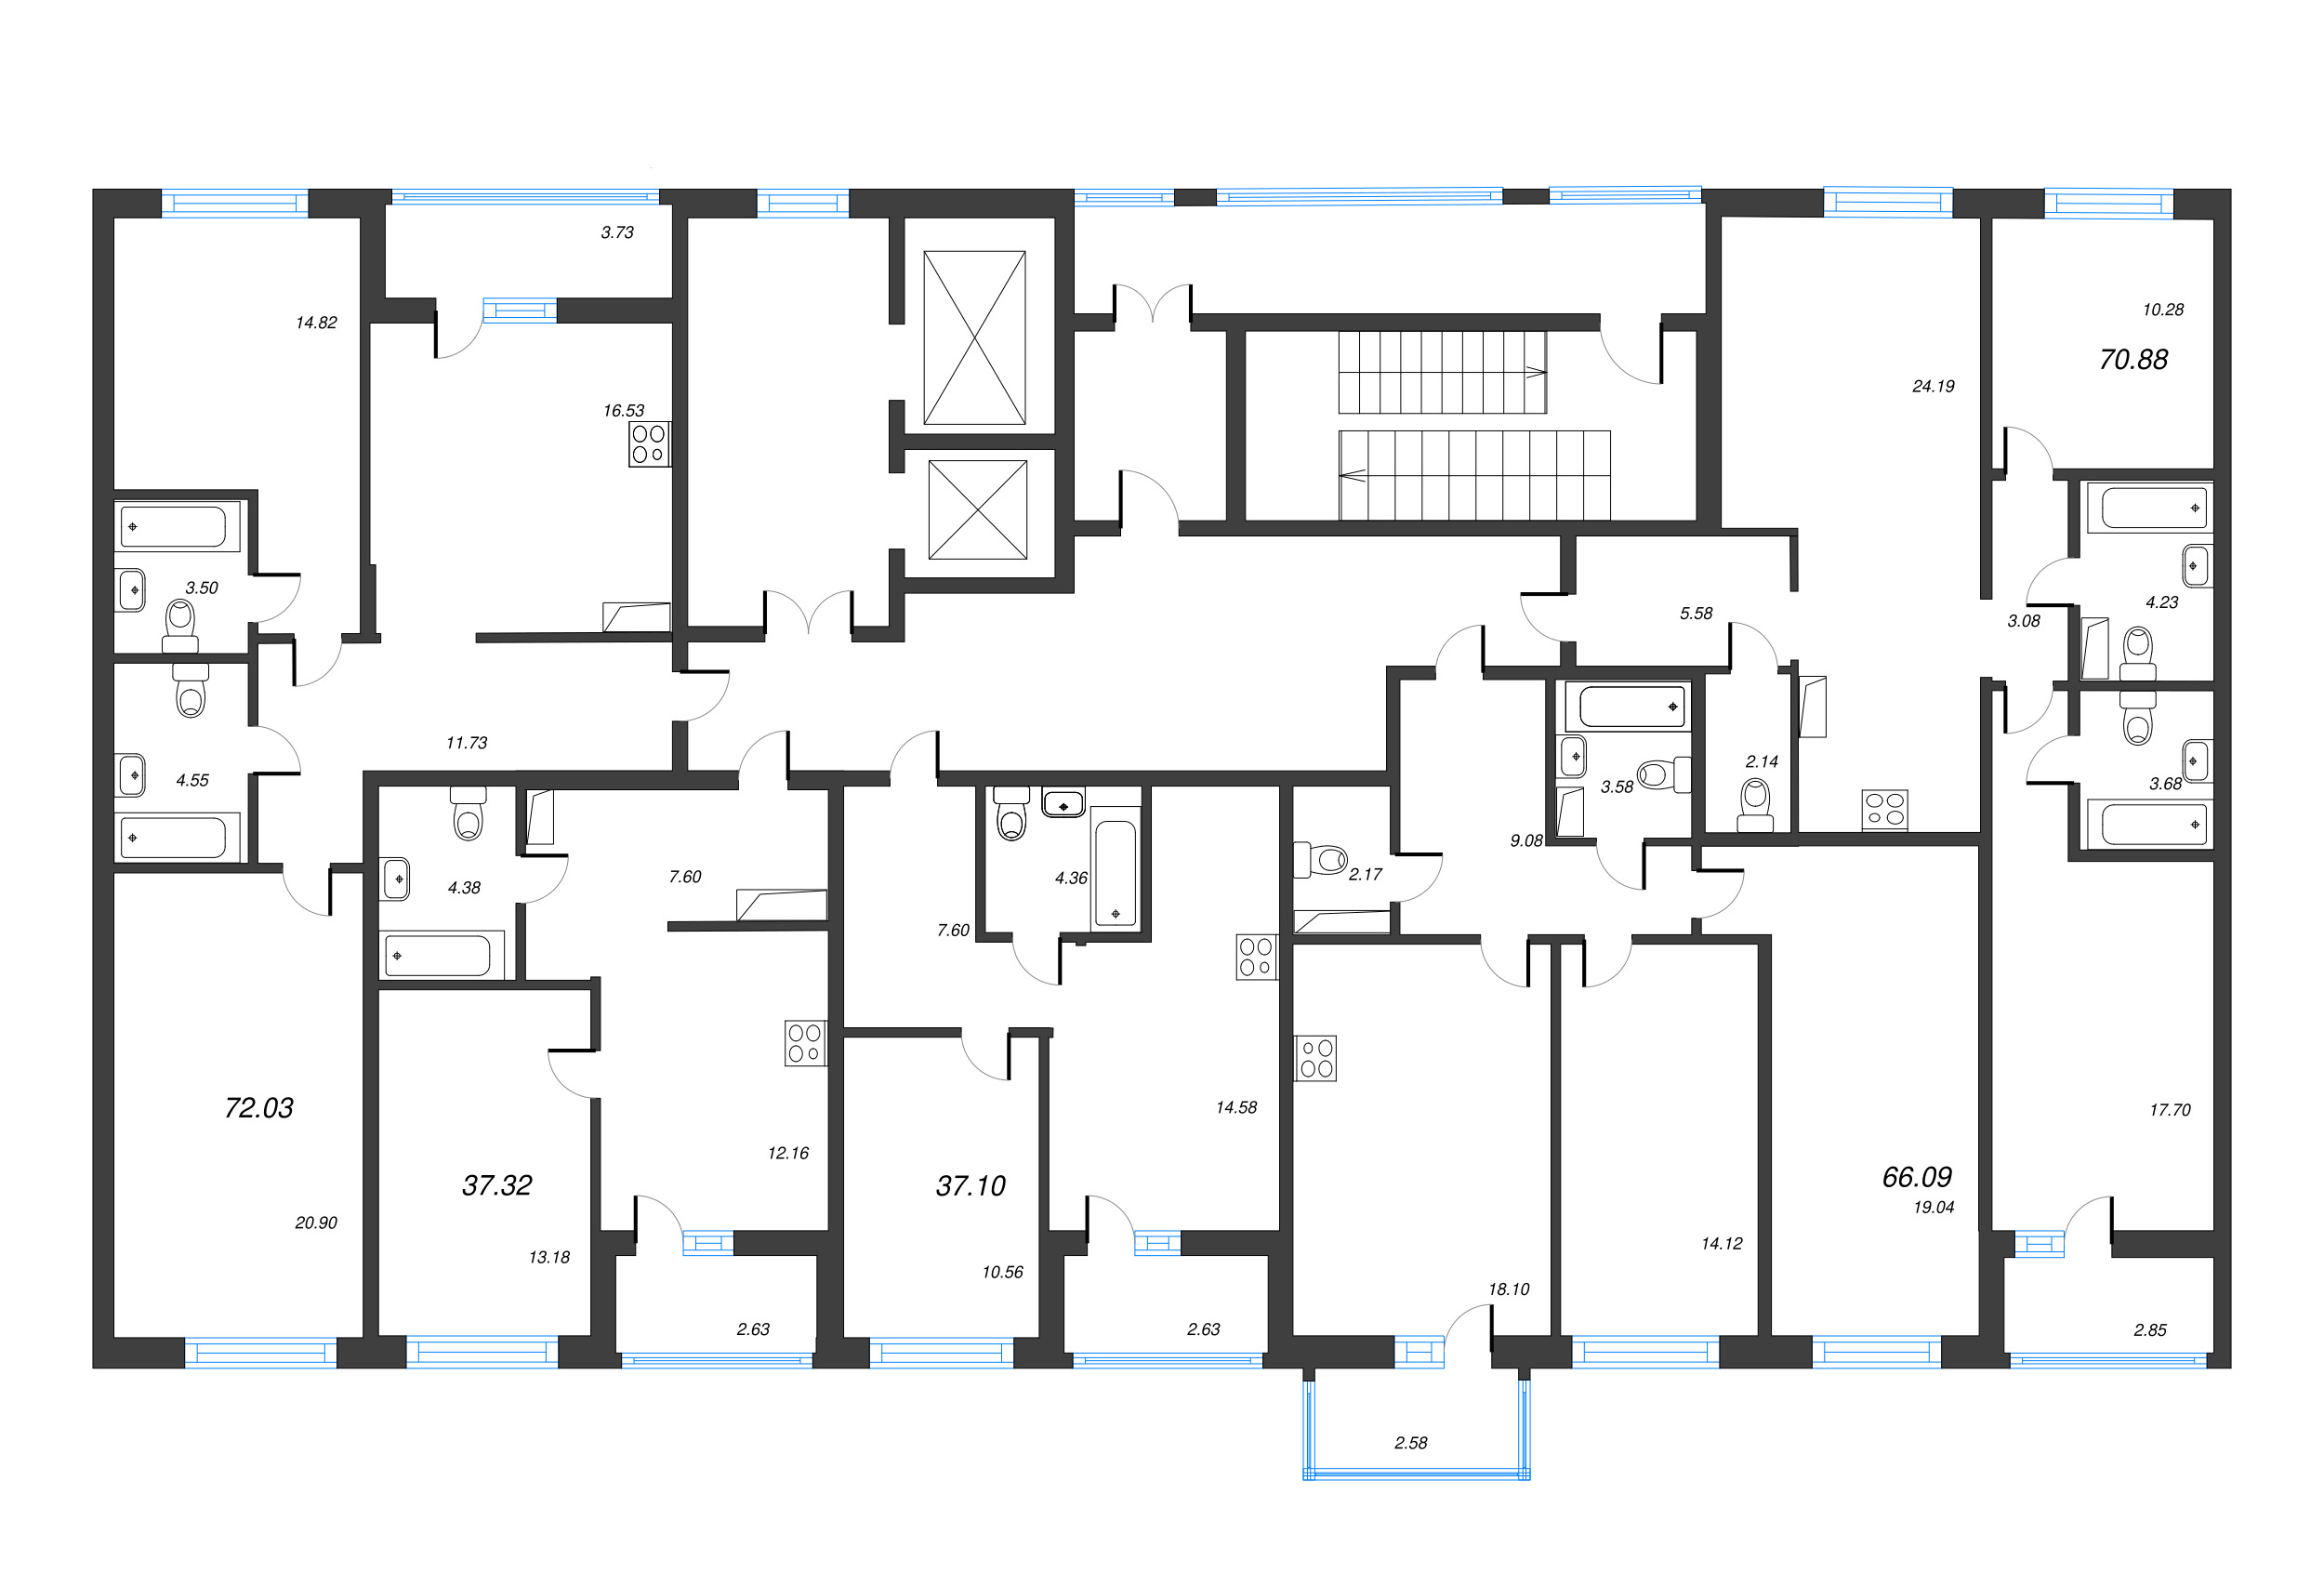 3-комнатная (Евро) квартира, 72.03 м² - планировка этажа